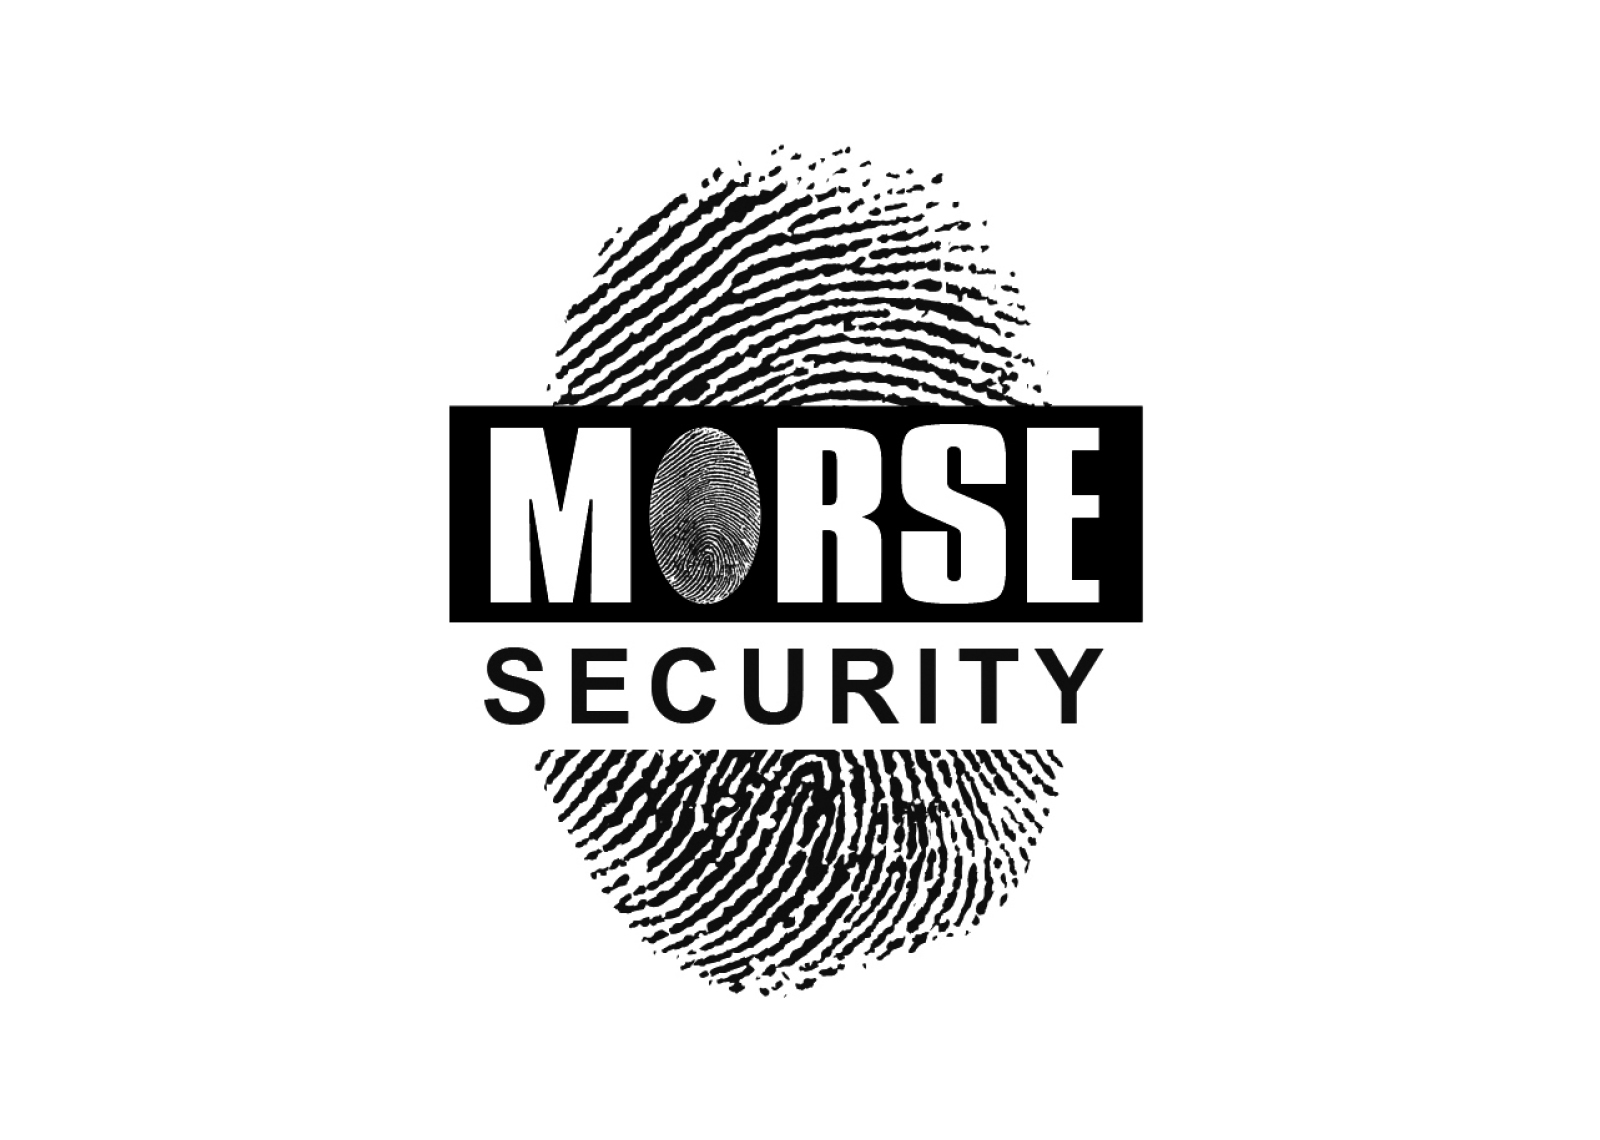 Morse Fire & Security